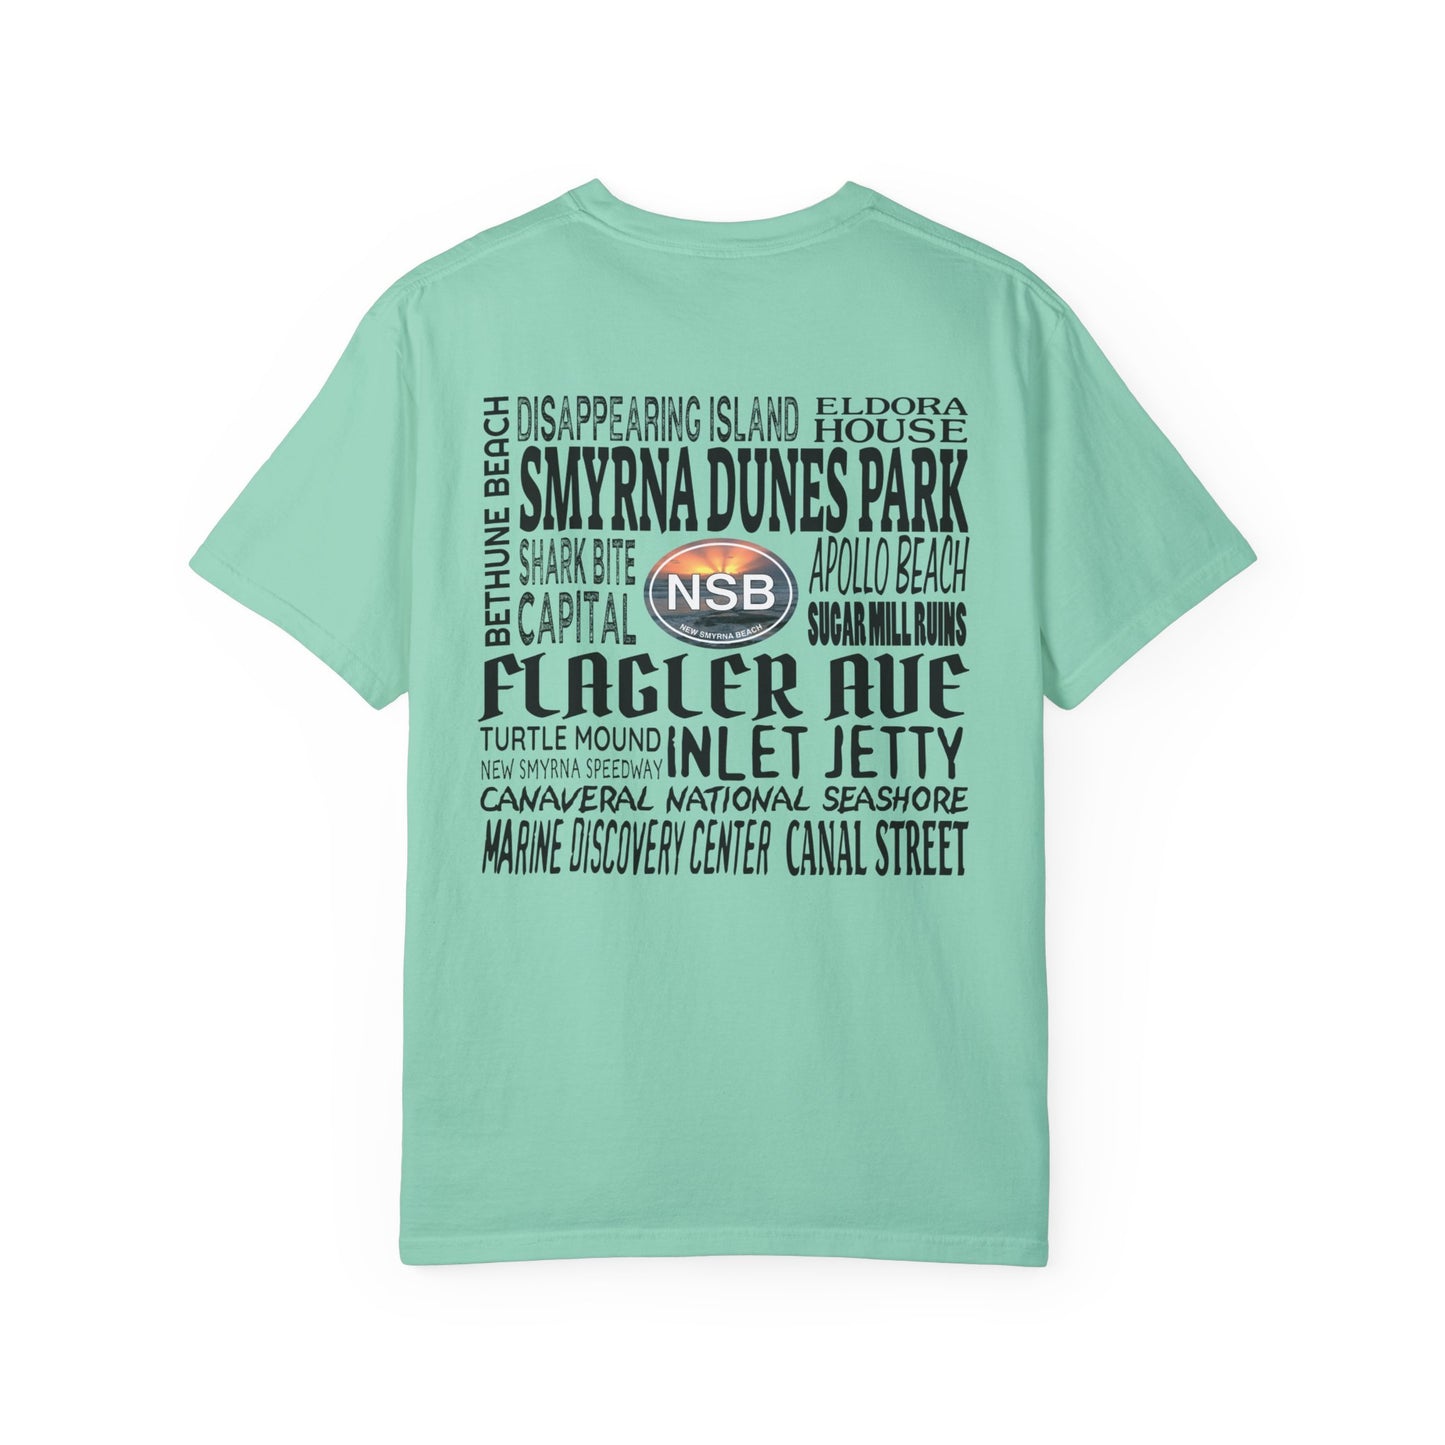 New Smyrna Beach Things to Do T-Shirt